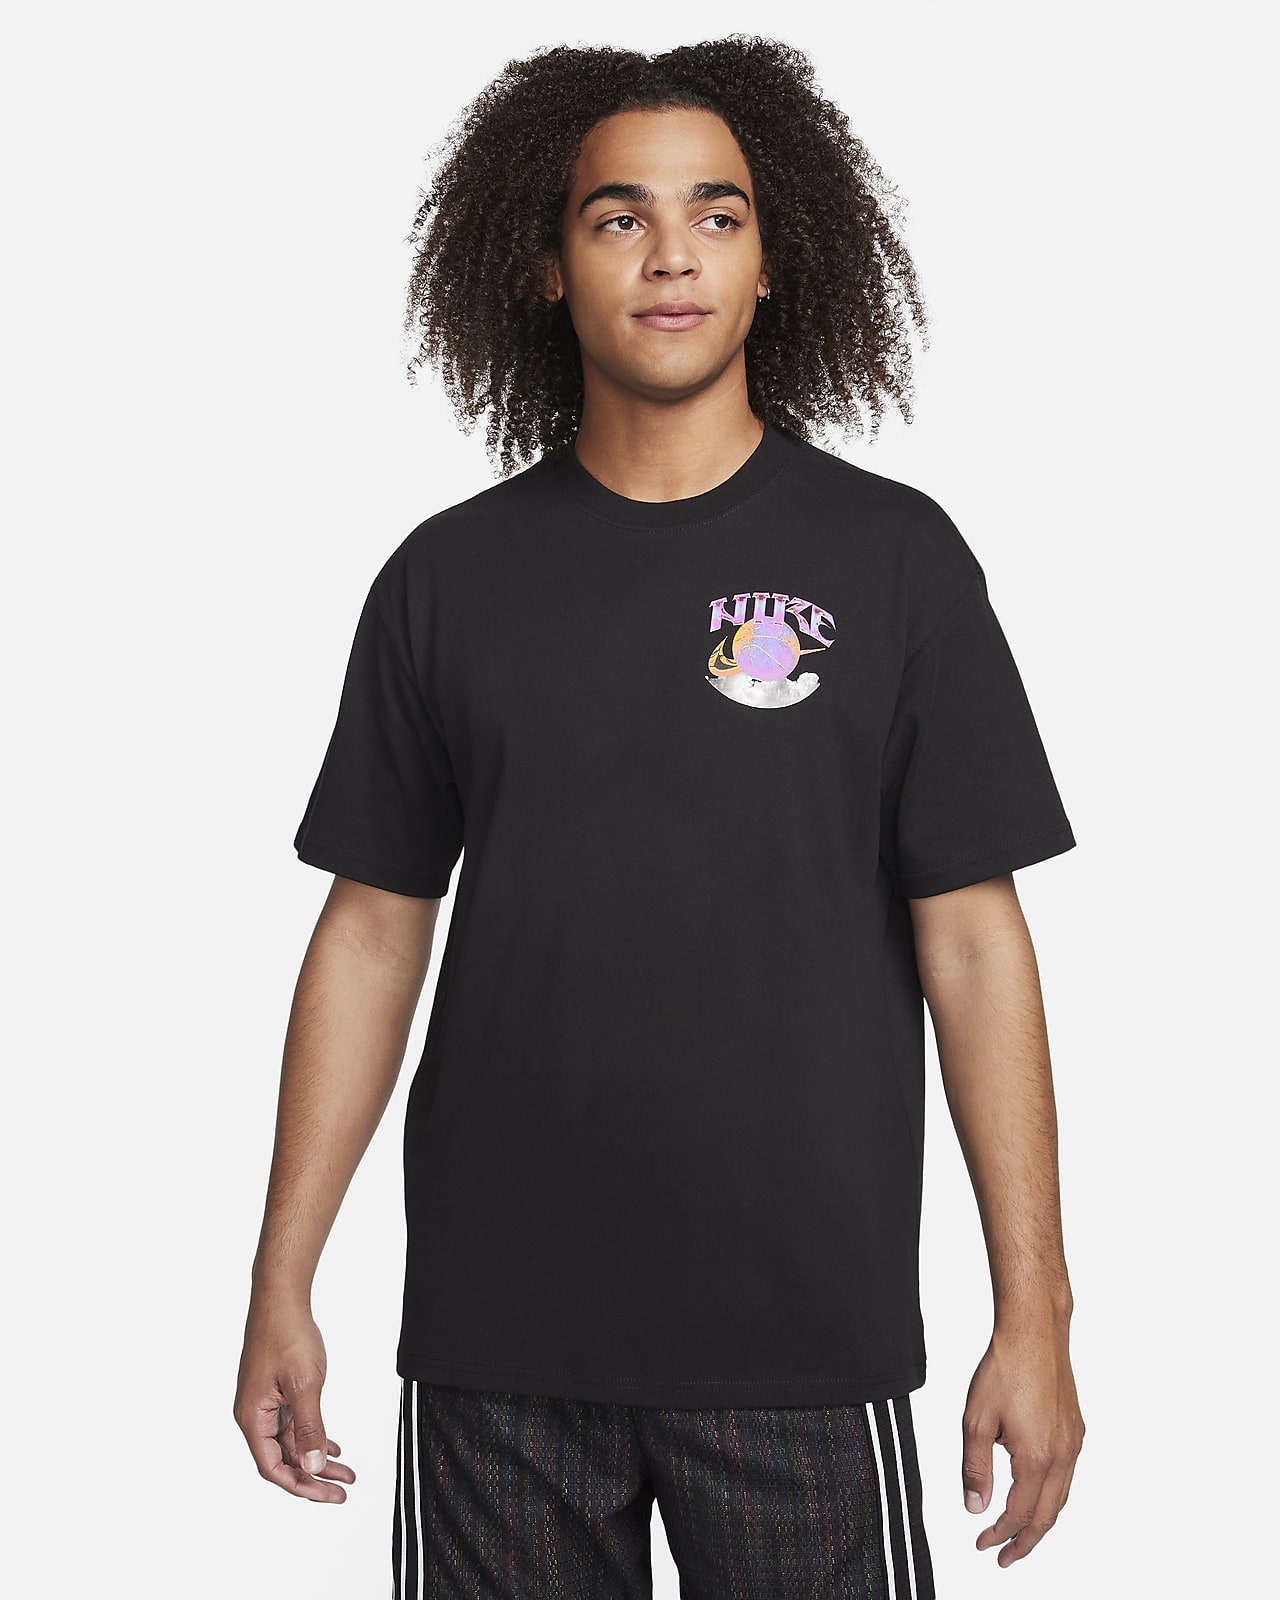 Nike Swoosh Men's Max90 Basketball T-Shirt